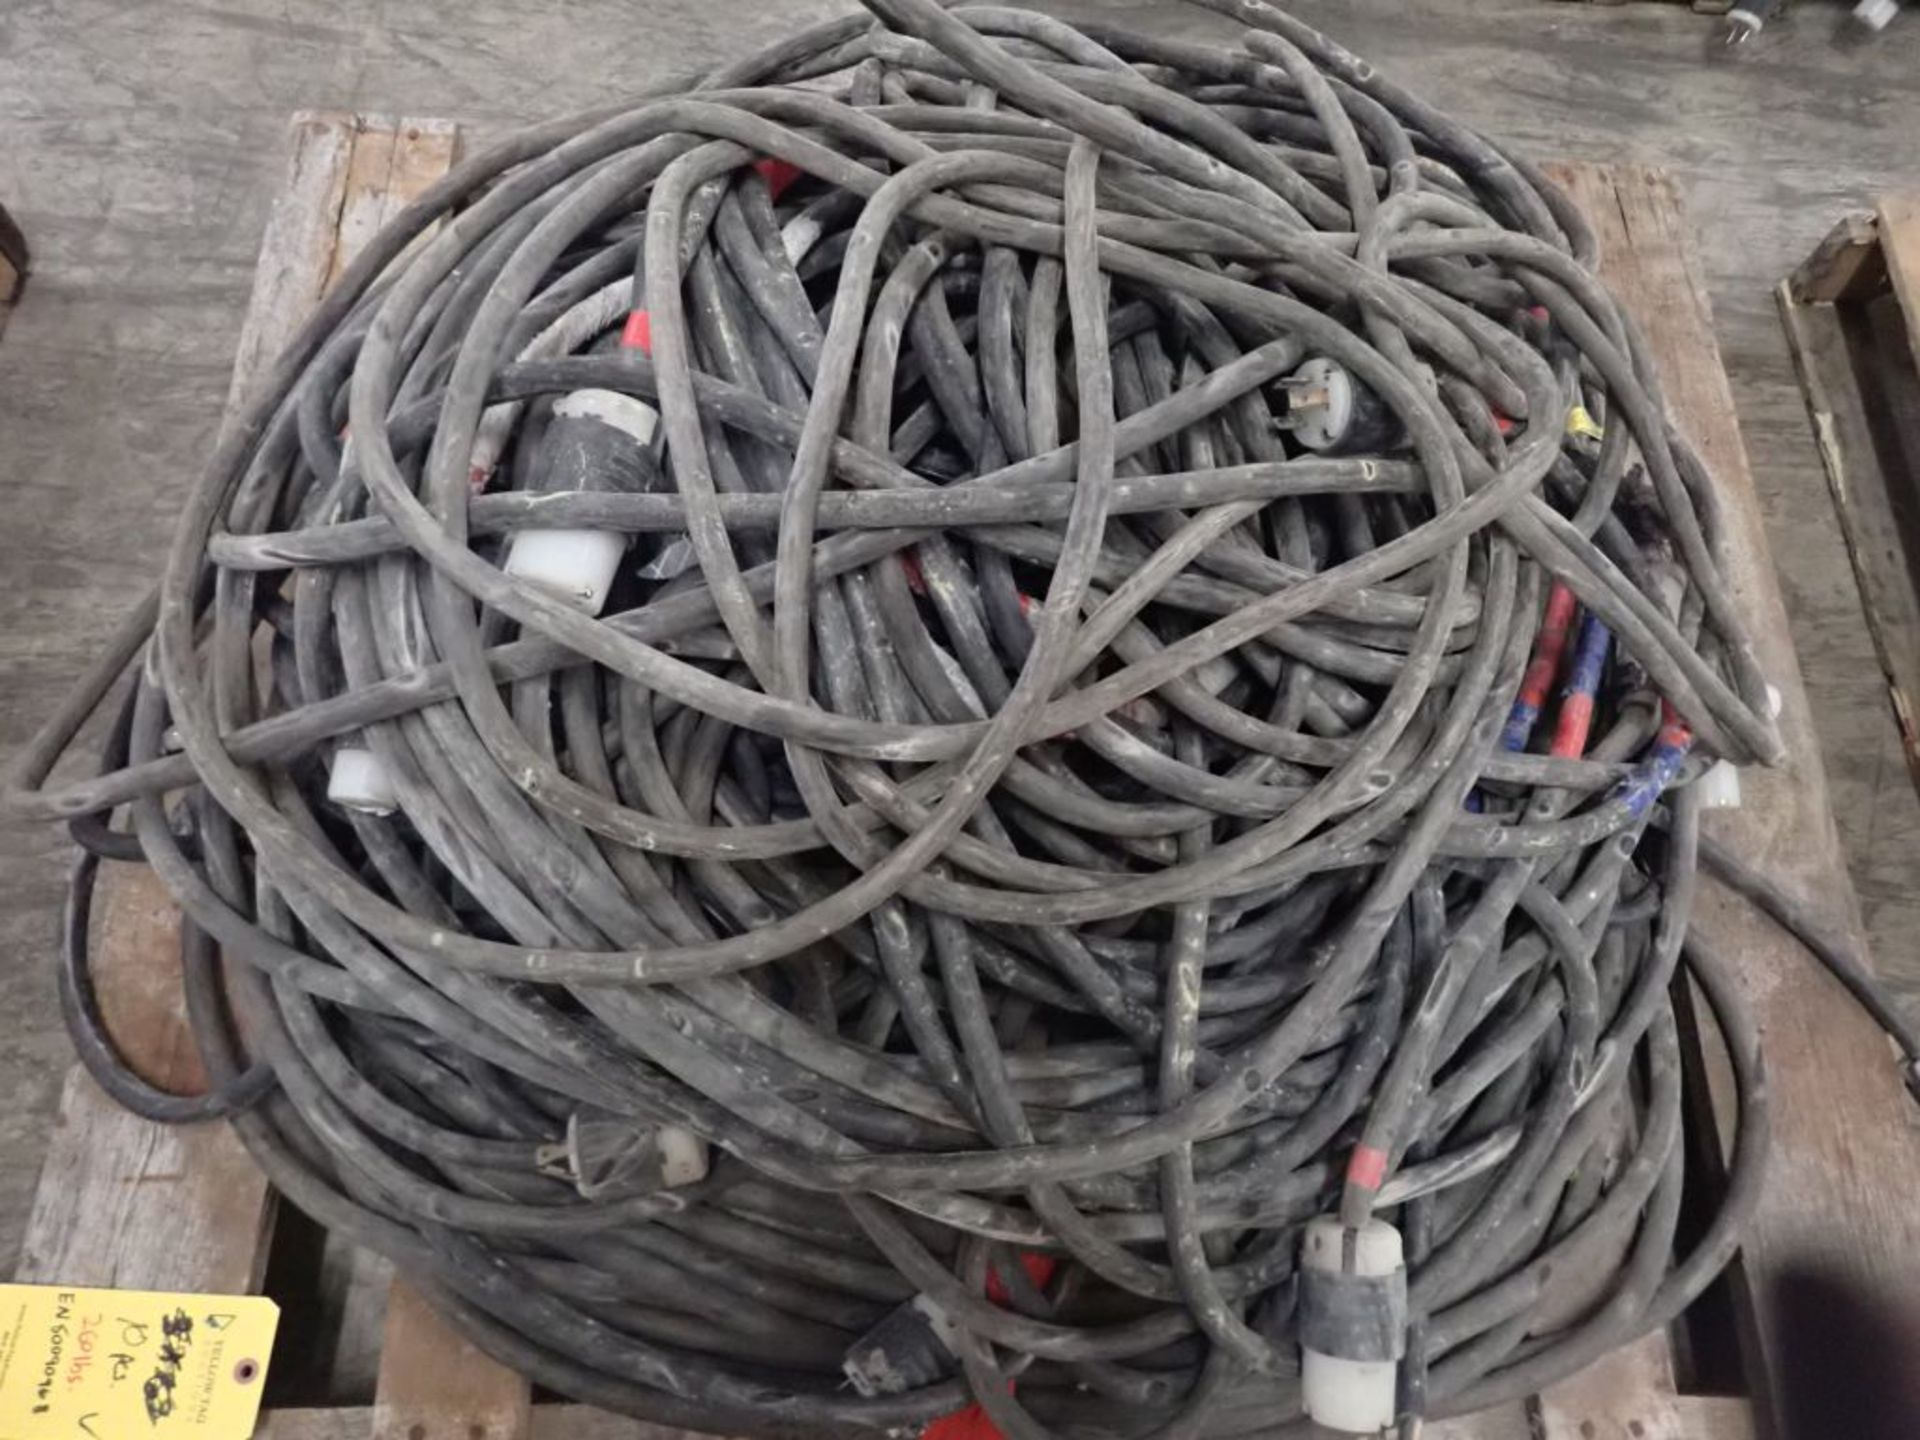 Lot of (10) Cords w/Connectors | 260 lbs